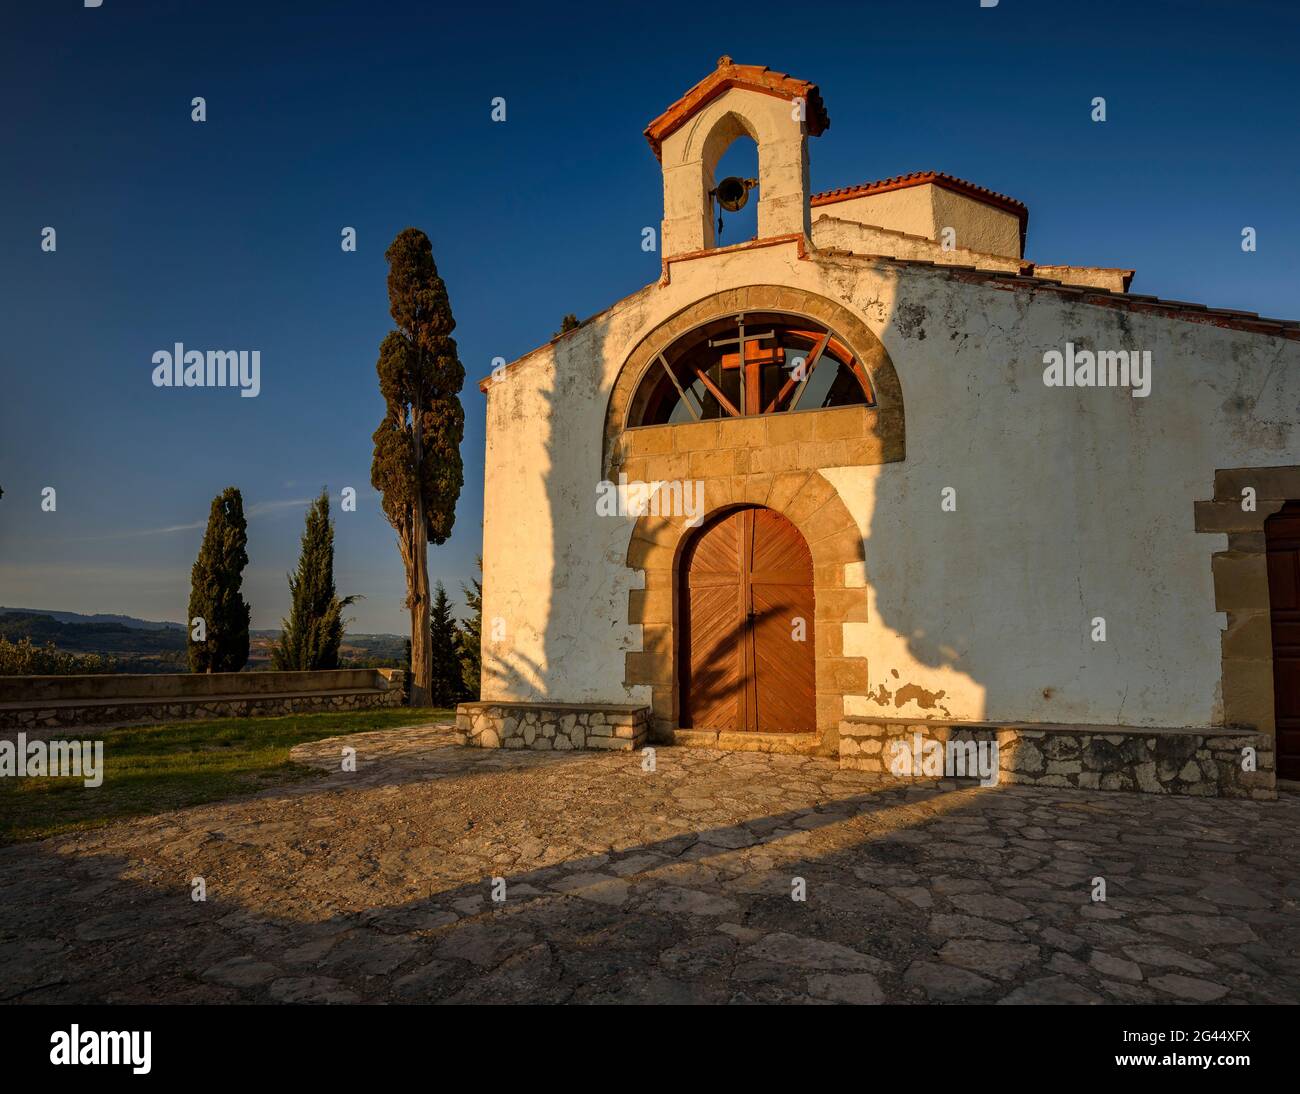 Sant josep de bot hi-res stock photography and images - Alamy